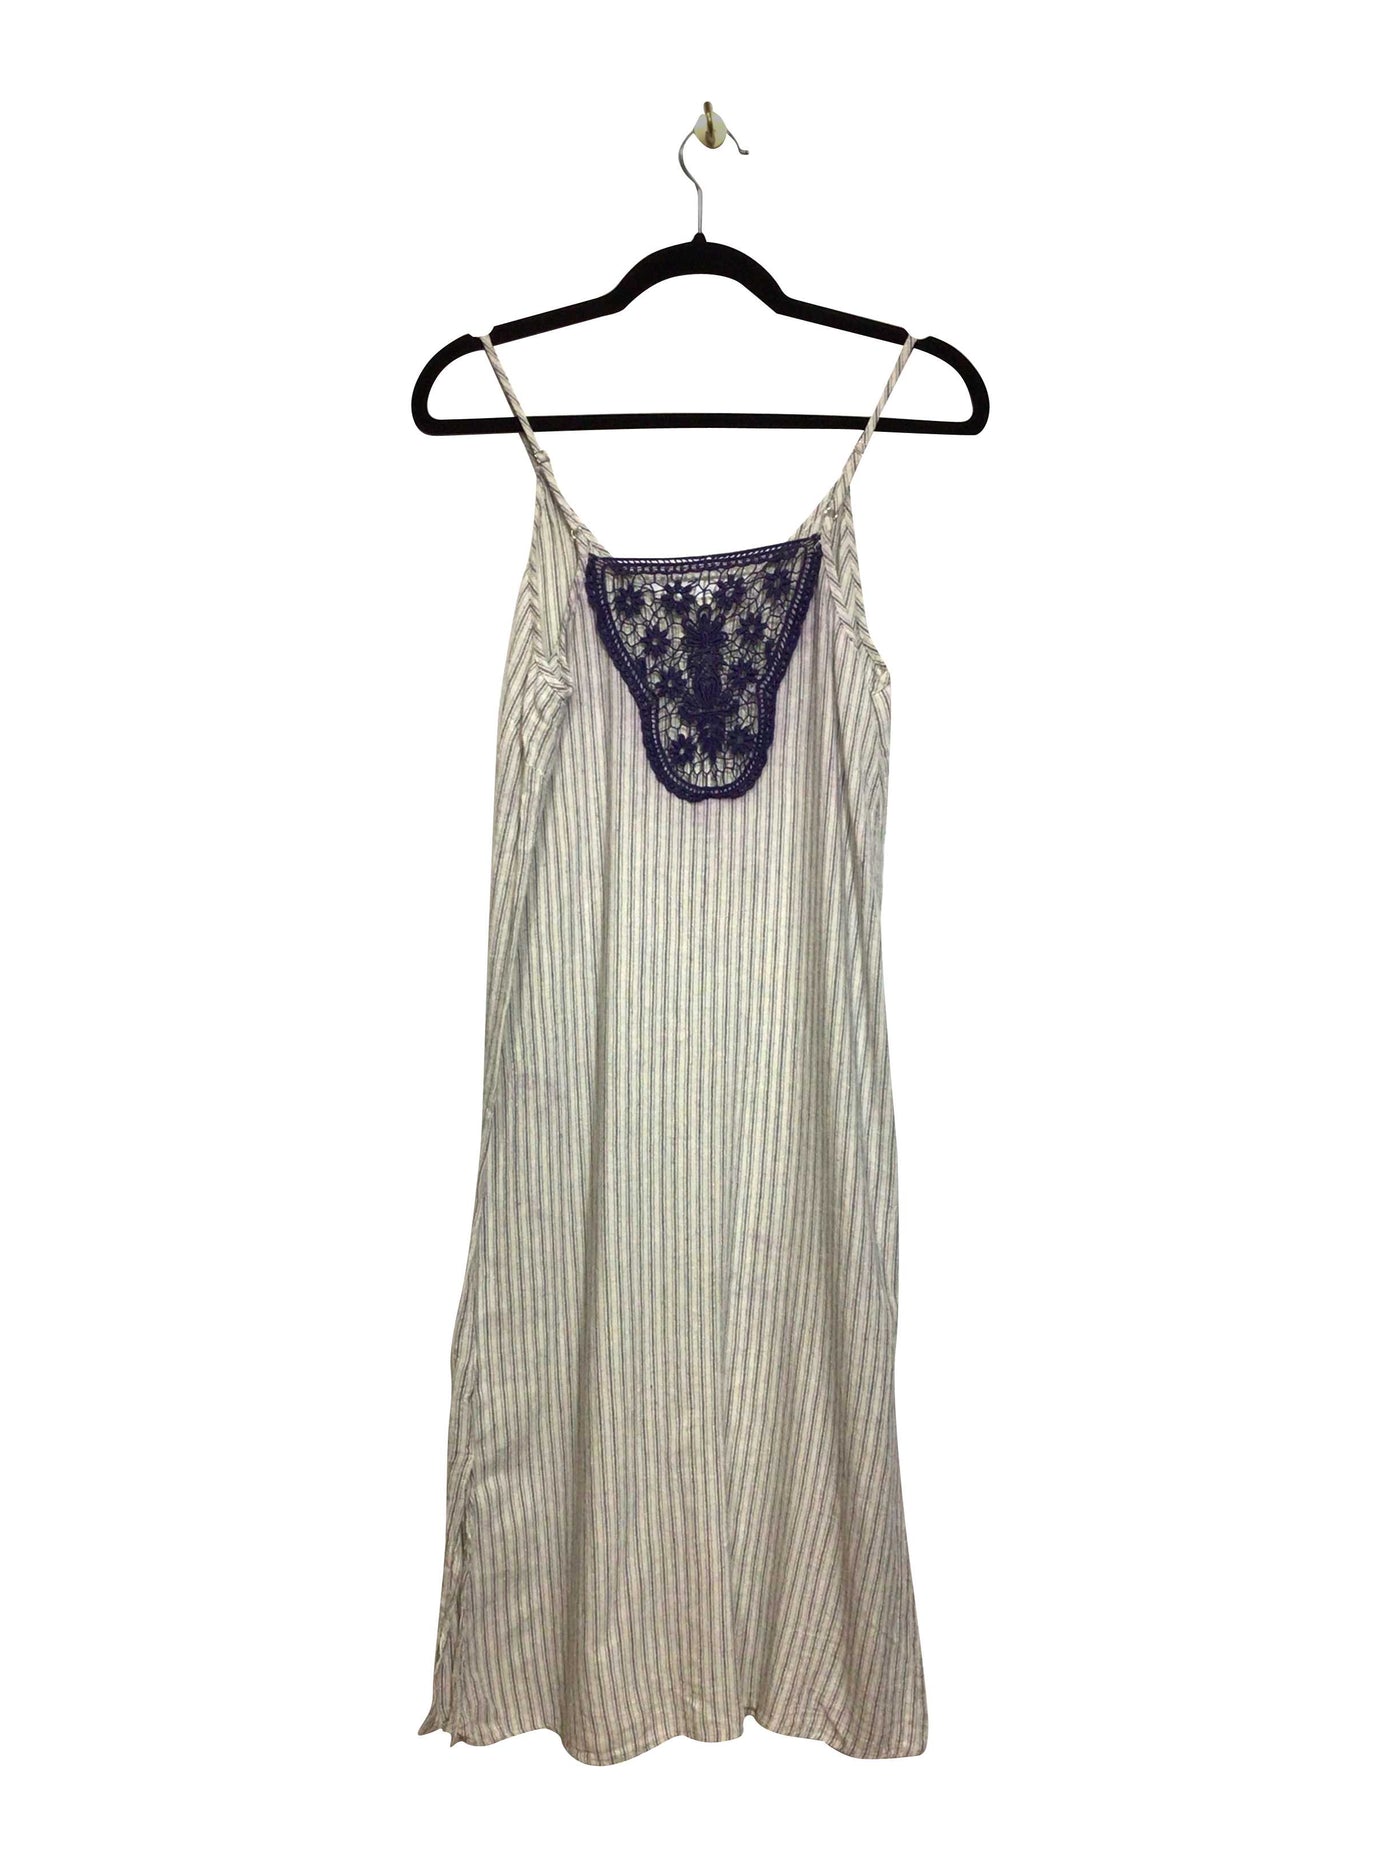 UNBRANDED Regular fit Maxi Dress in White  -  S  11.99 Koop